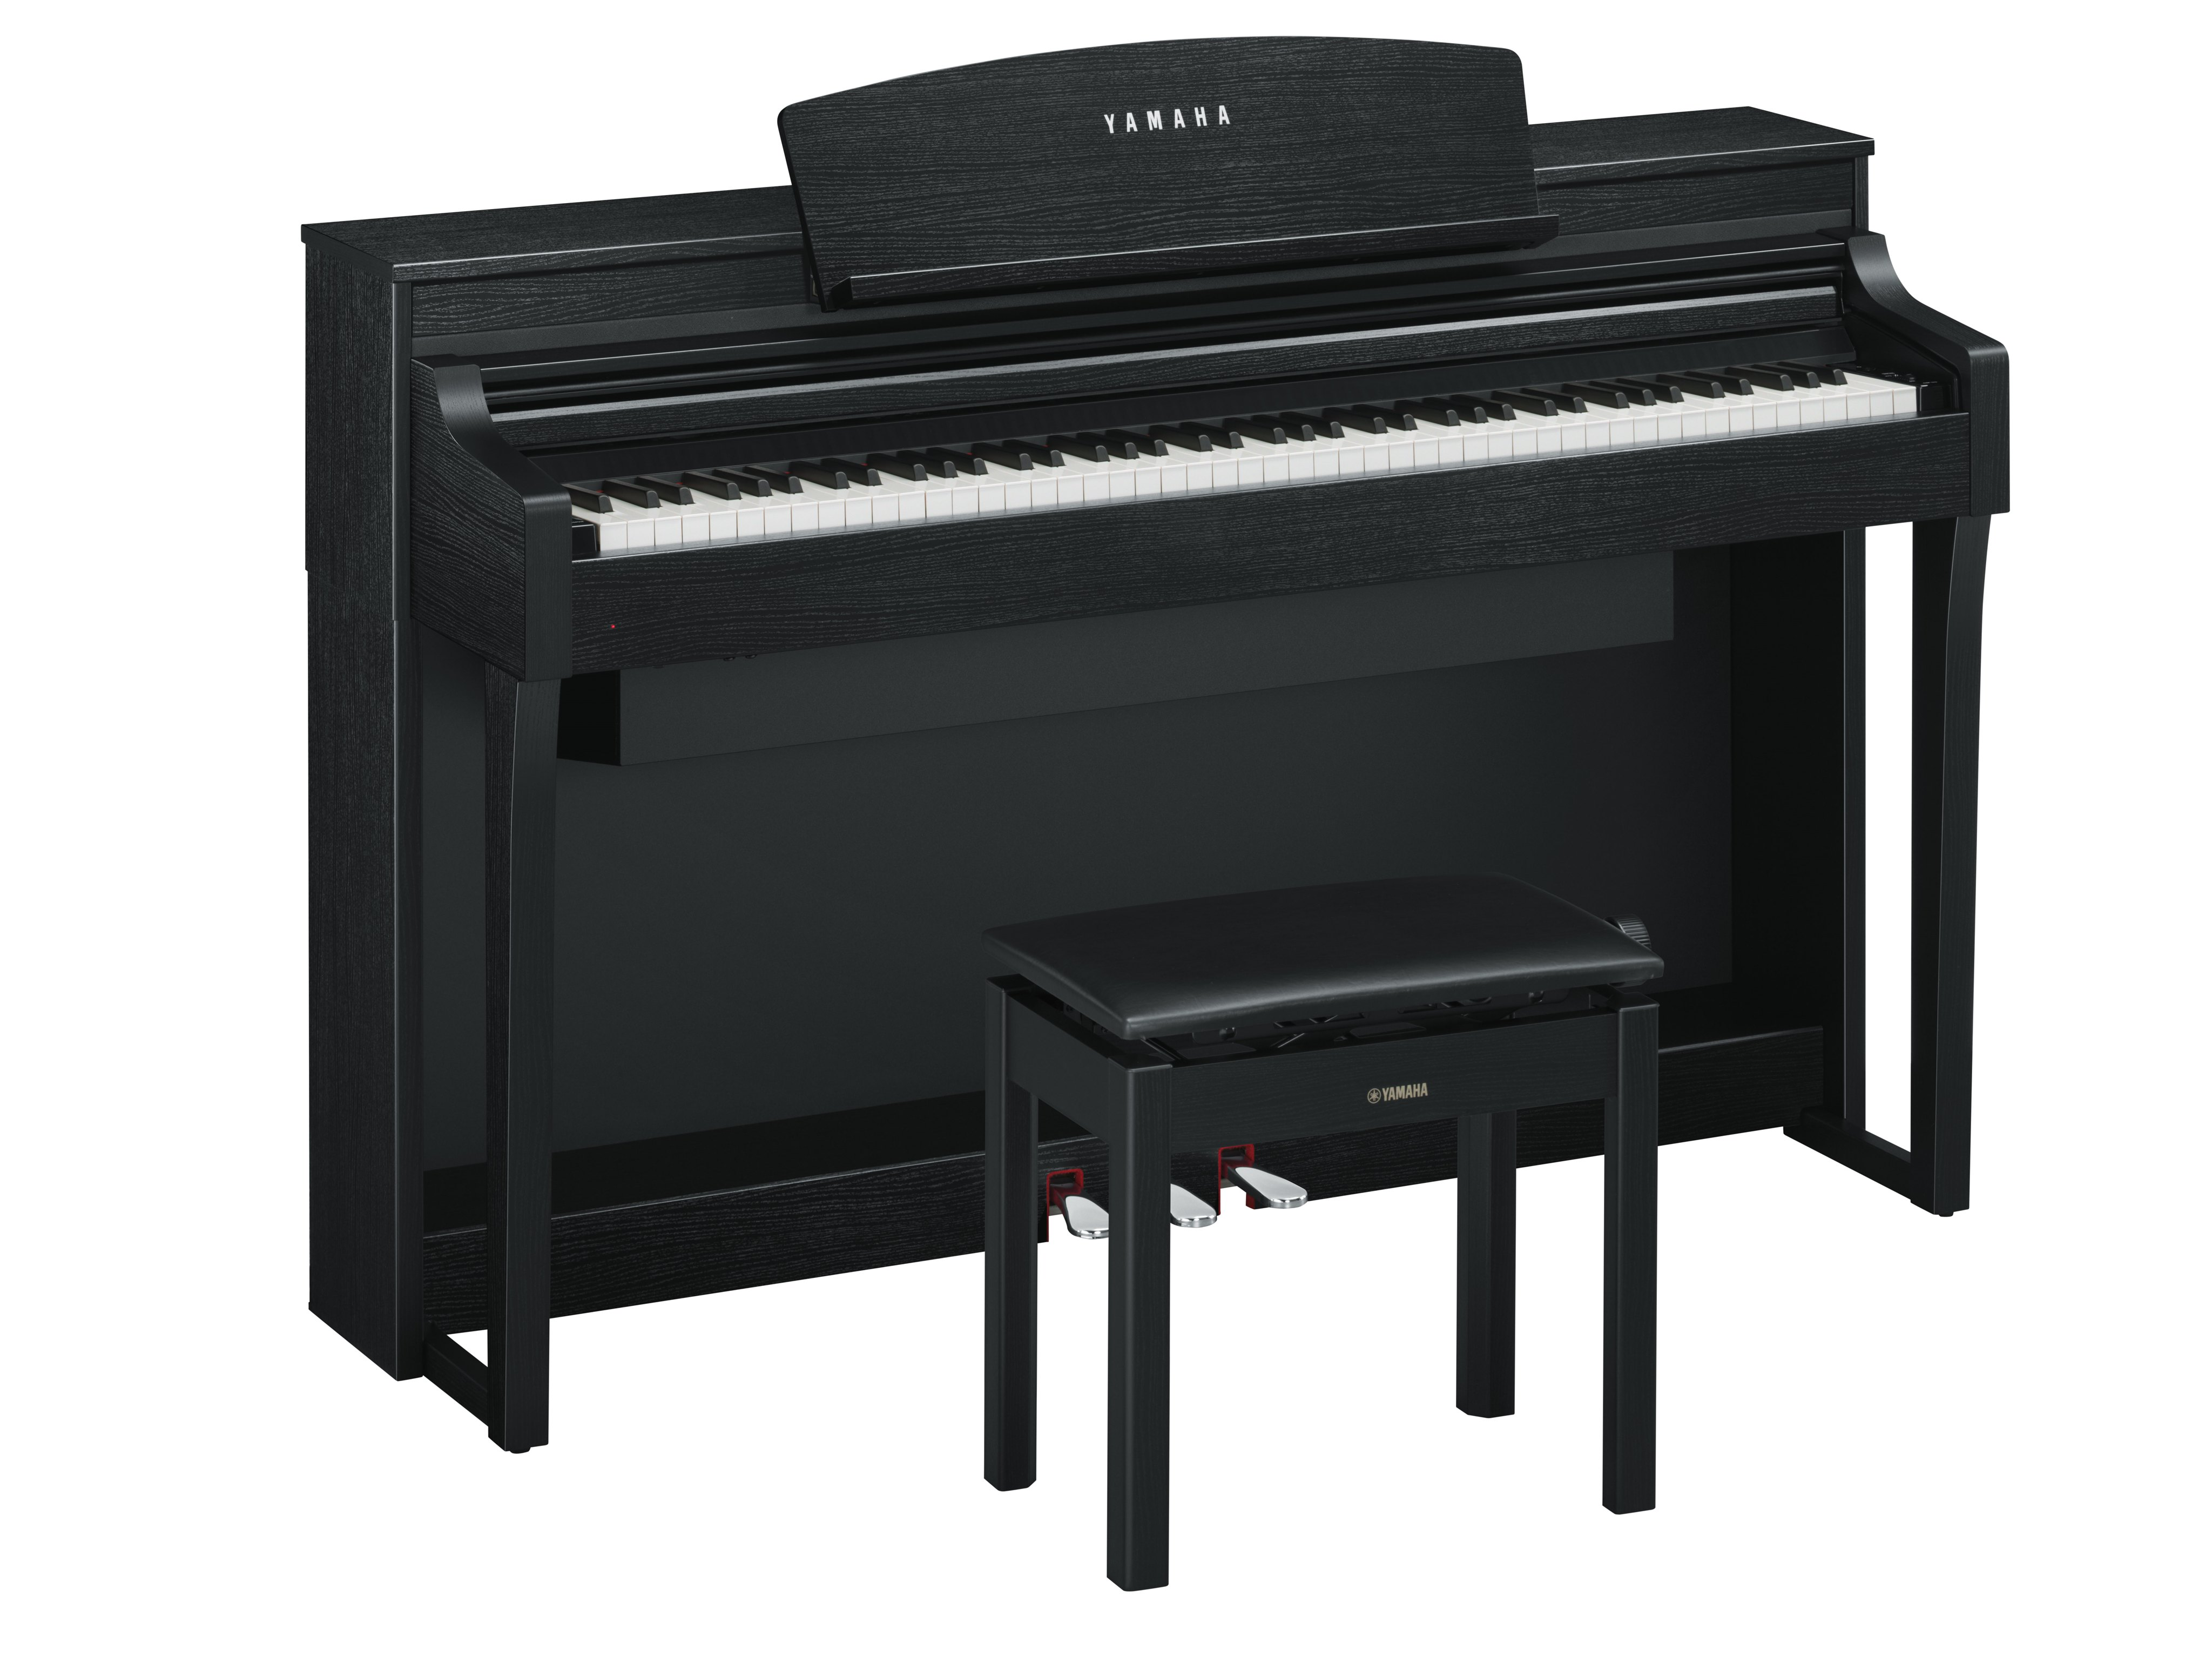 خرید پیانو دیجیتال CSP-170 یاماها